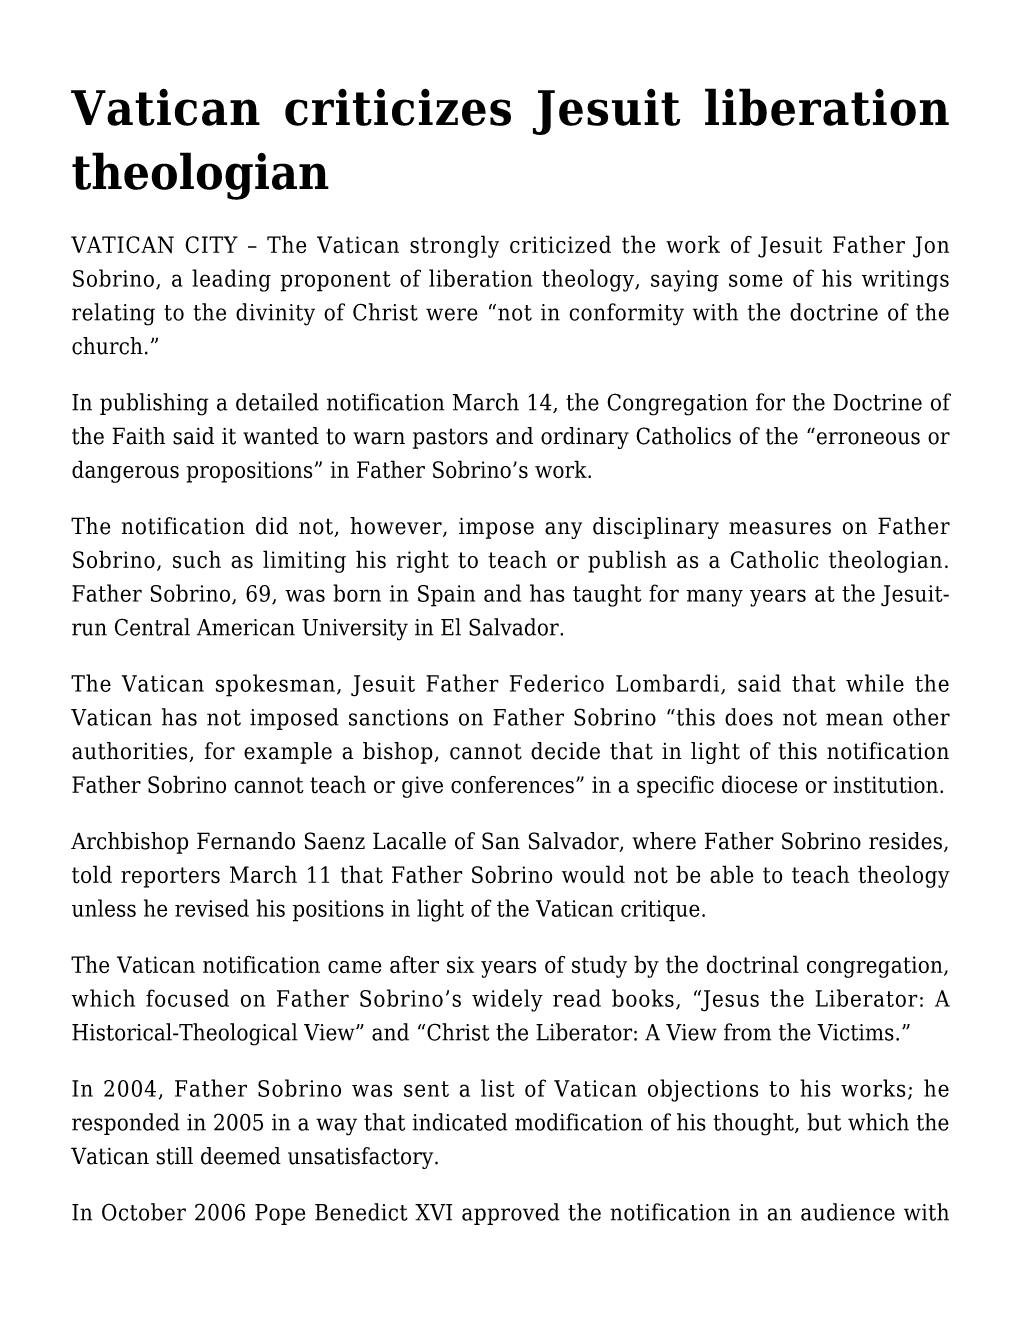 Vatican Criticizes Jesuit Liberation Theologian